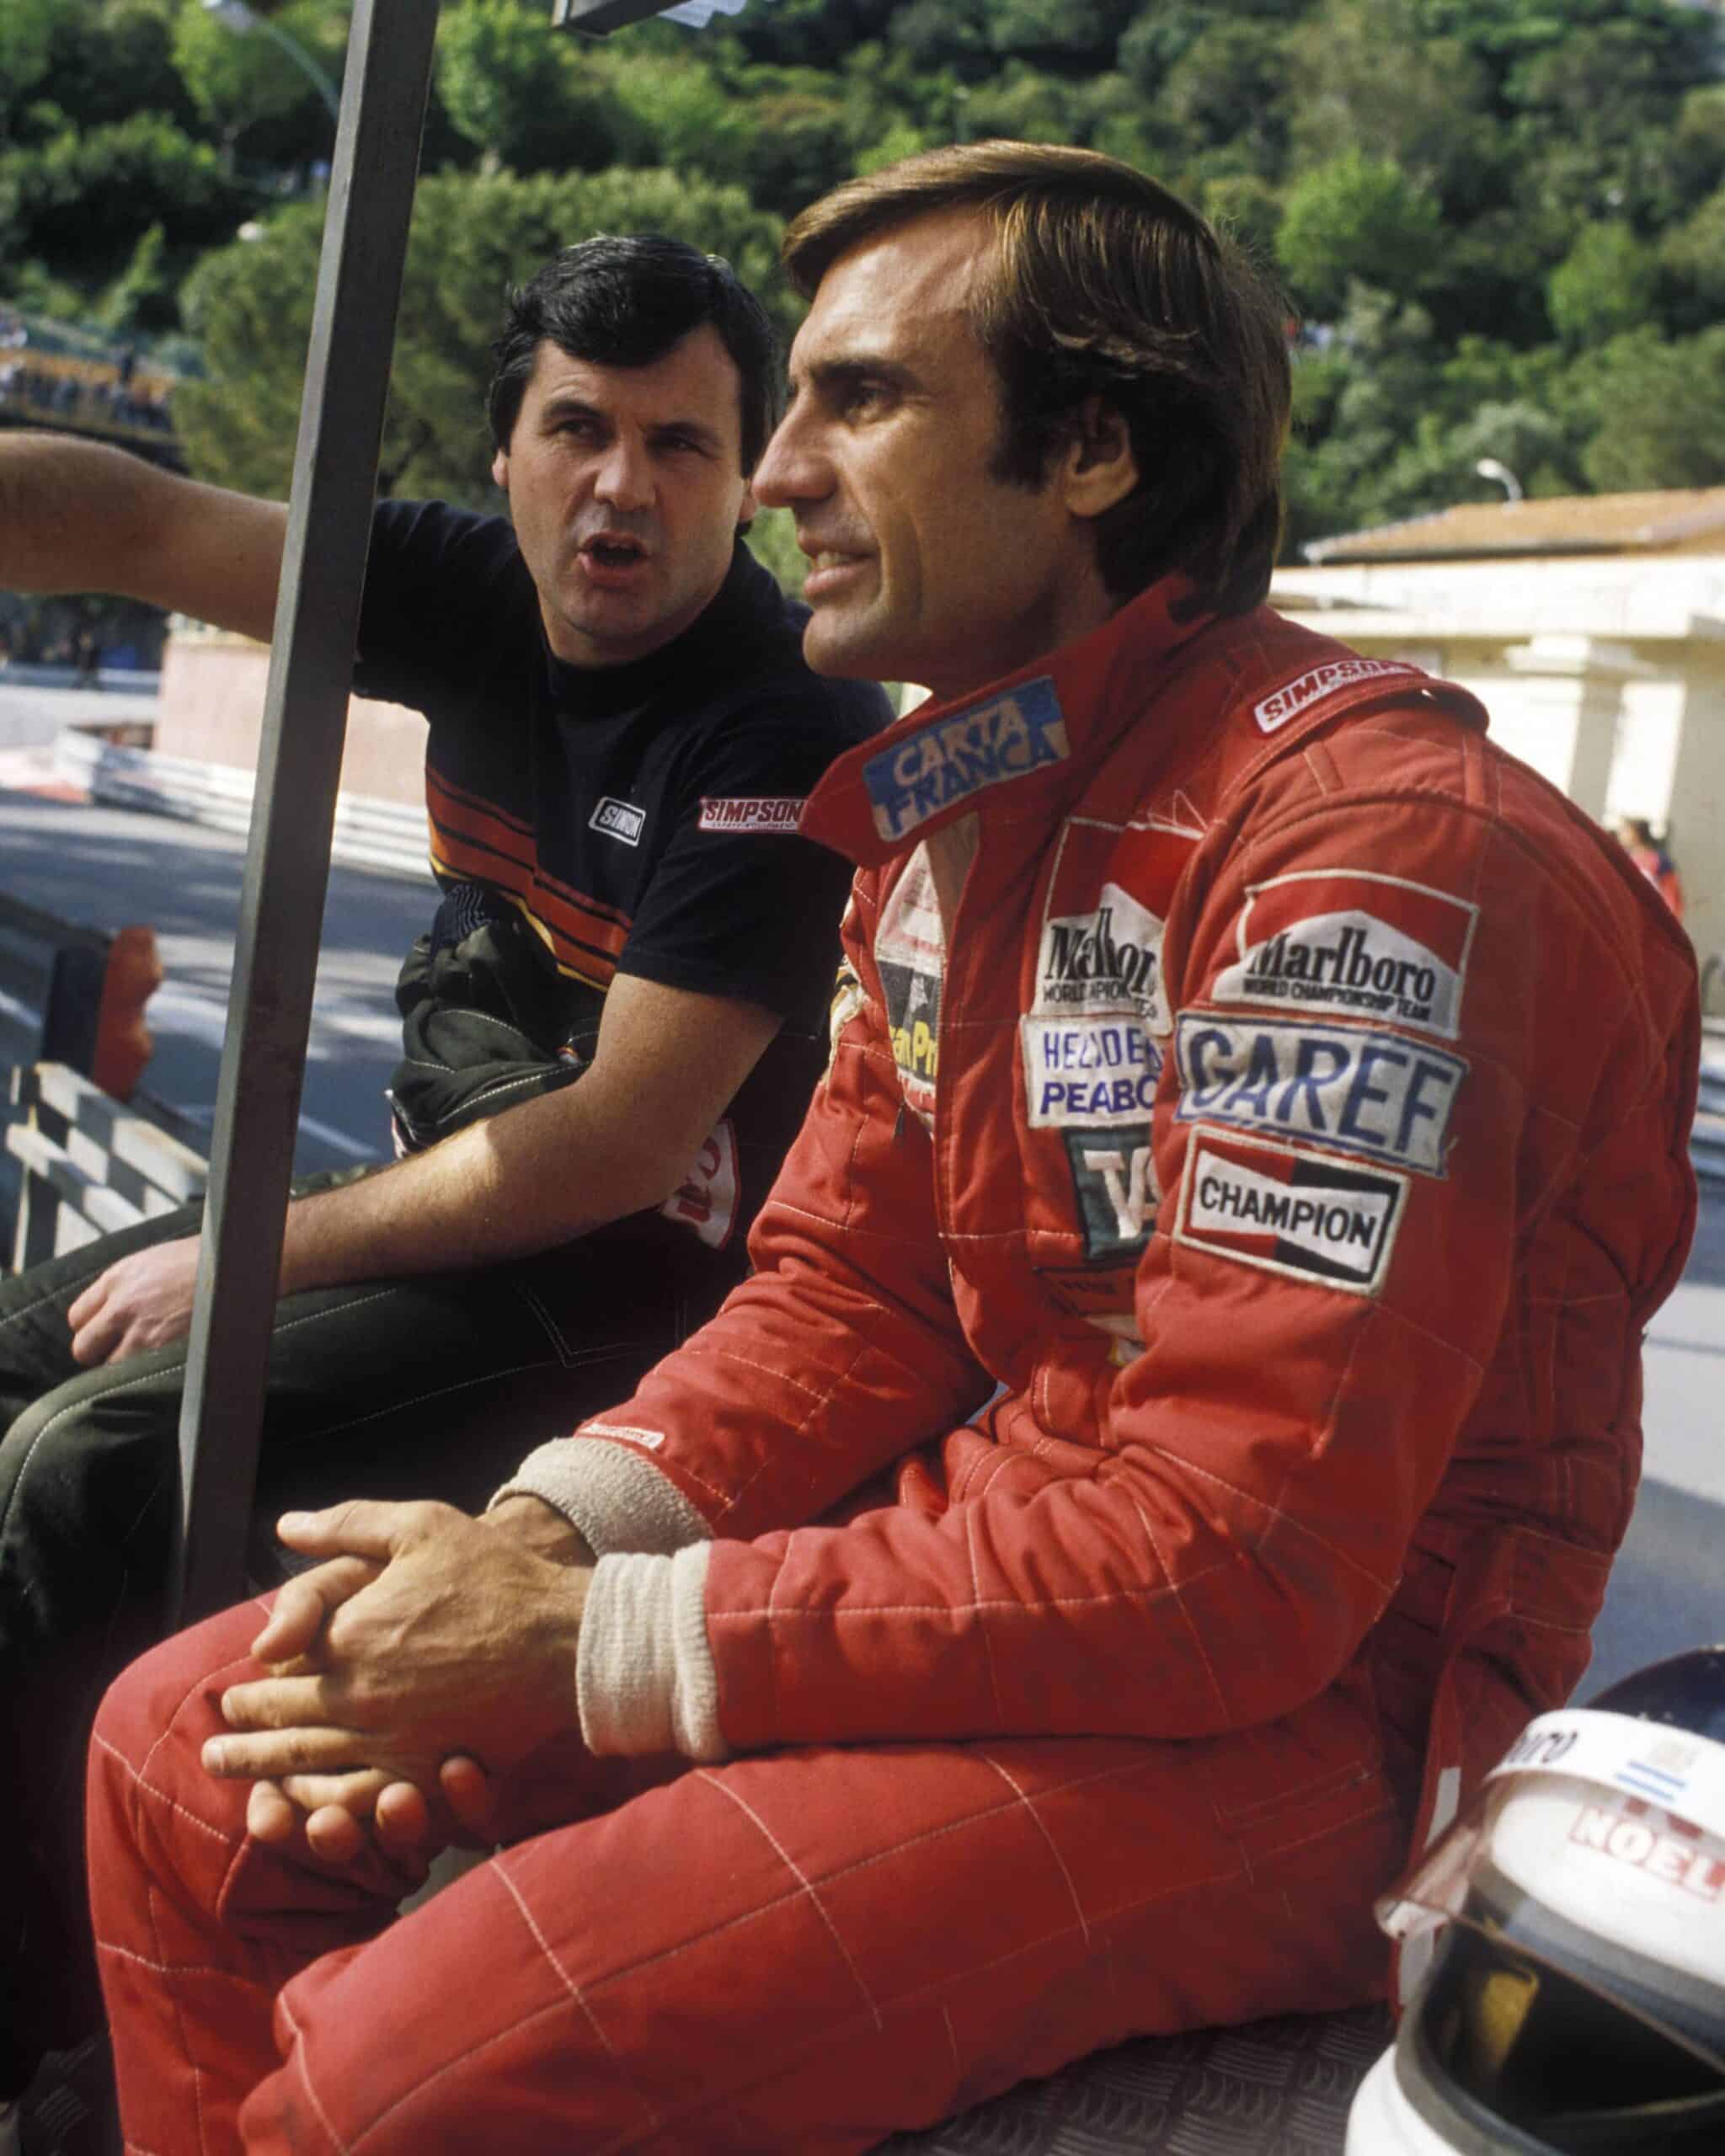 Alan Jones and Carlos Reutemann chat